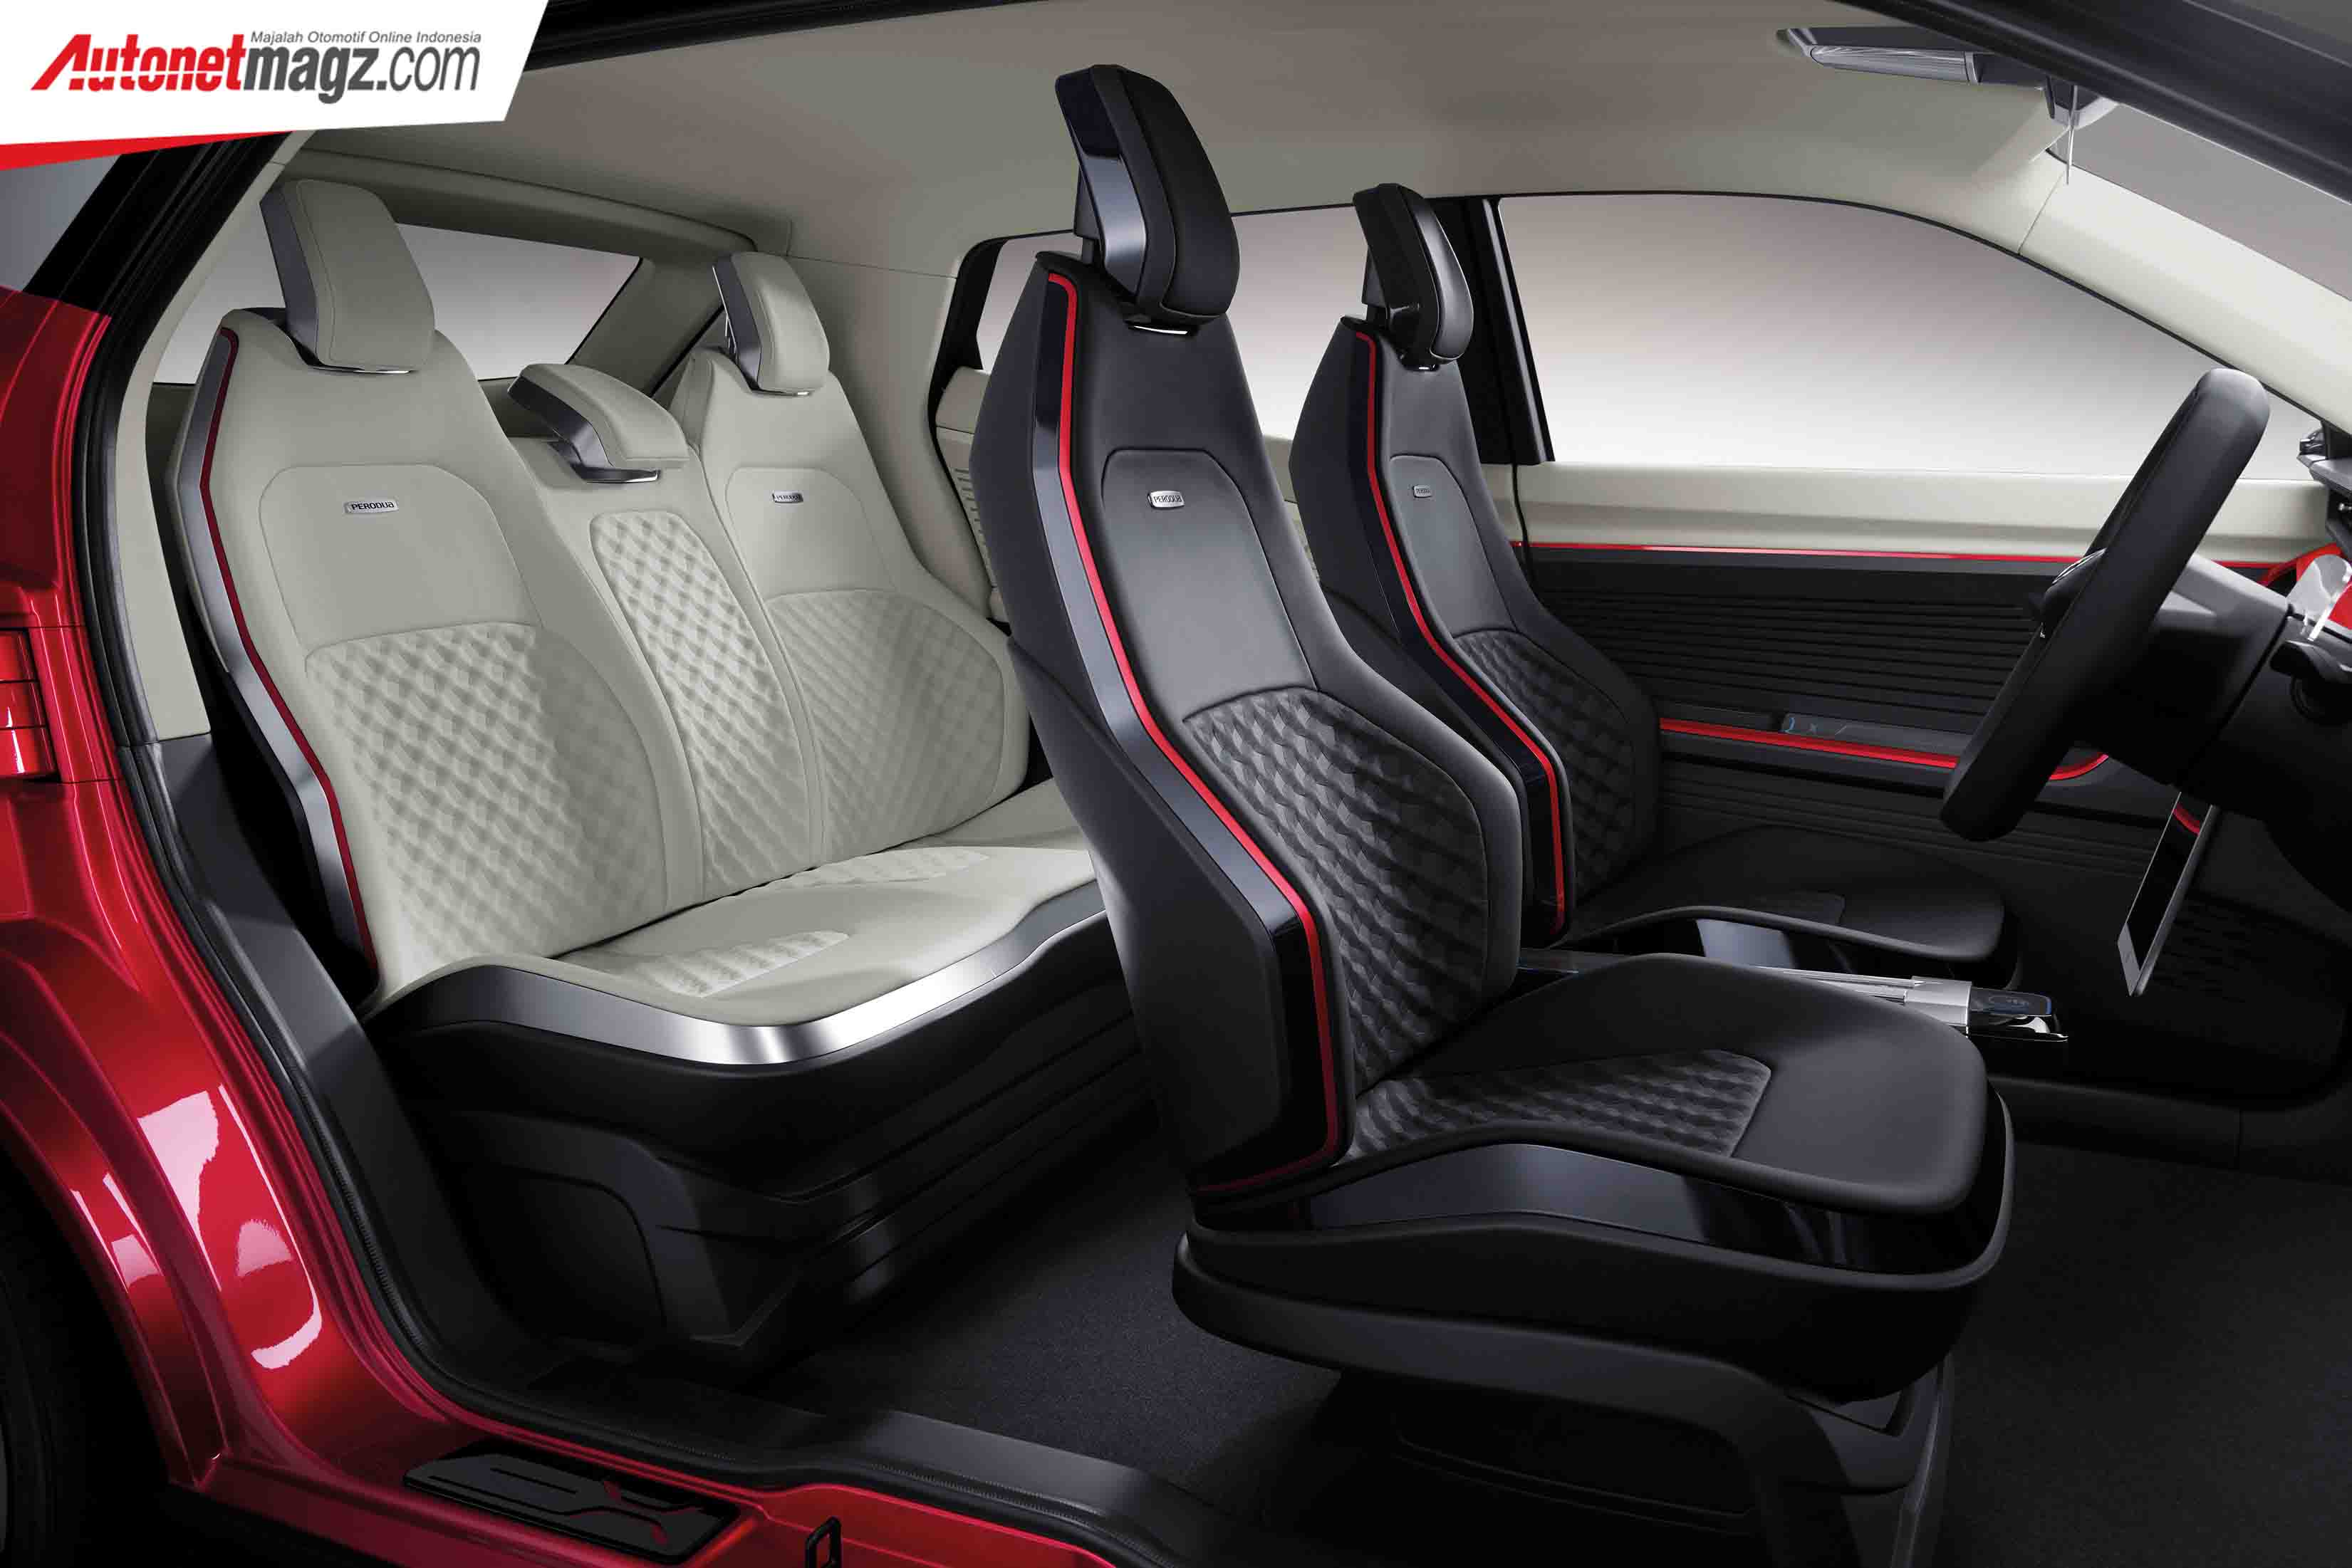 Kabin Perodua X-Concept – AutonetMagz :: Review Mobil dan 